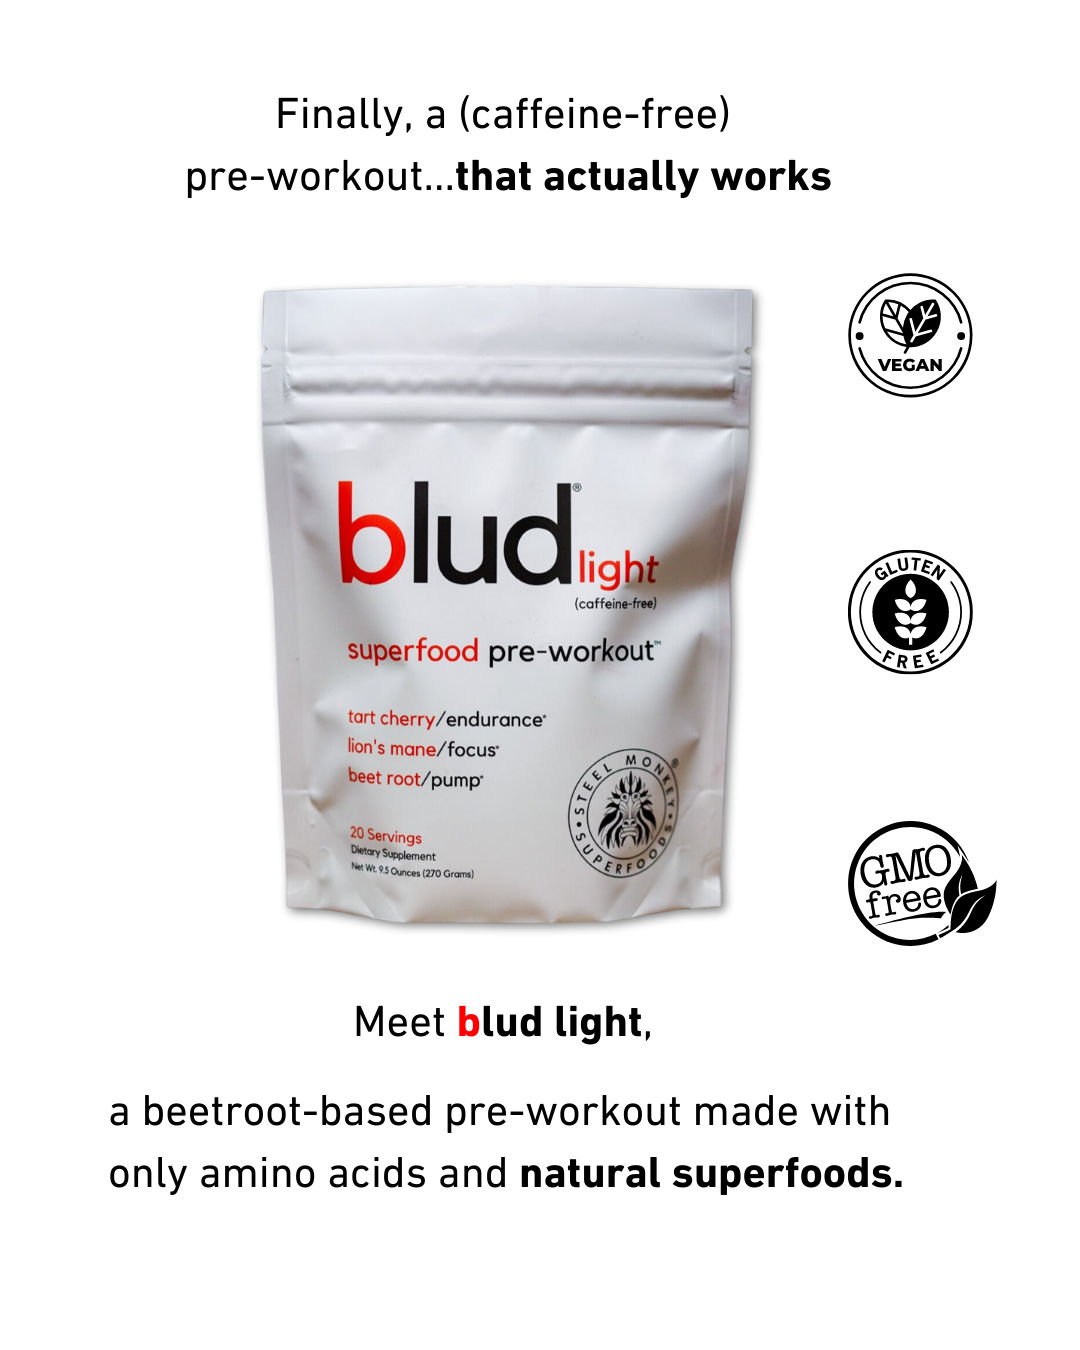 blud light caffeine free pre-workout